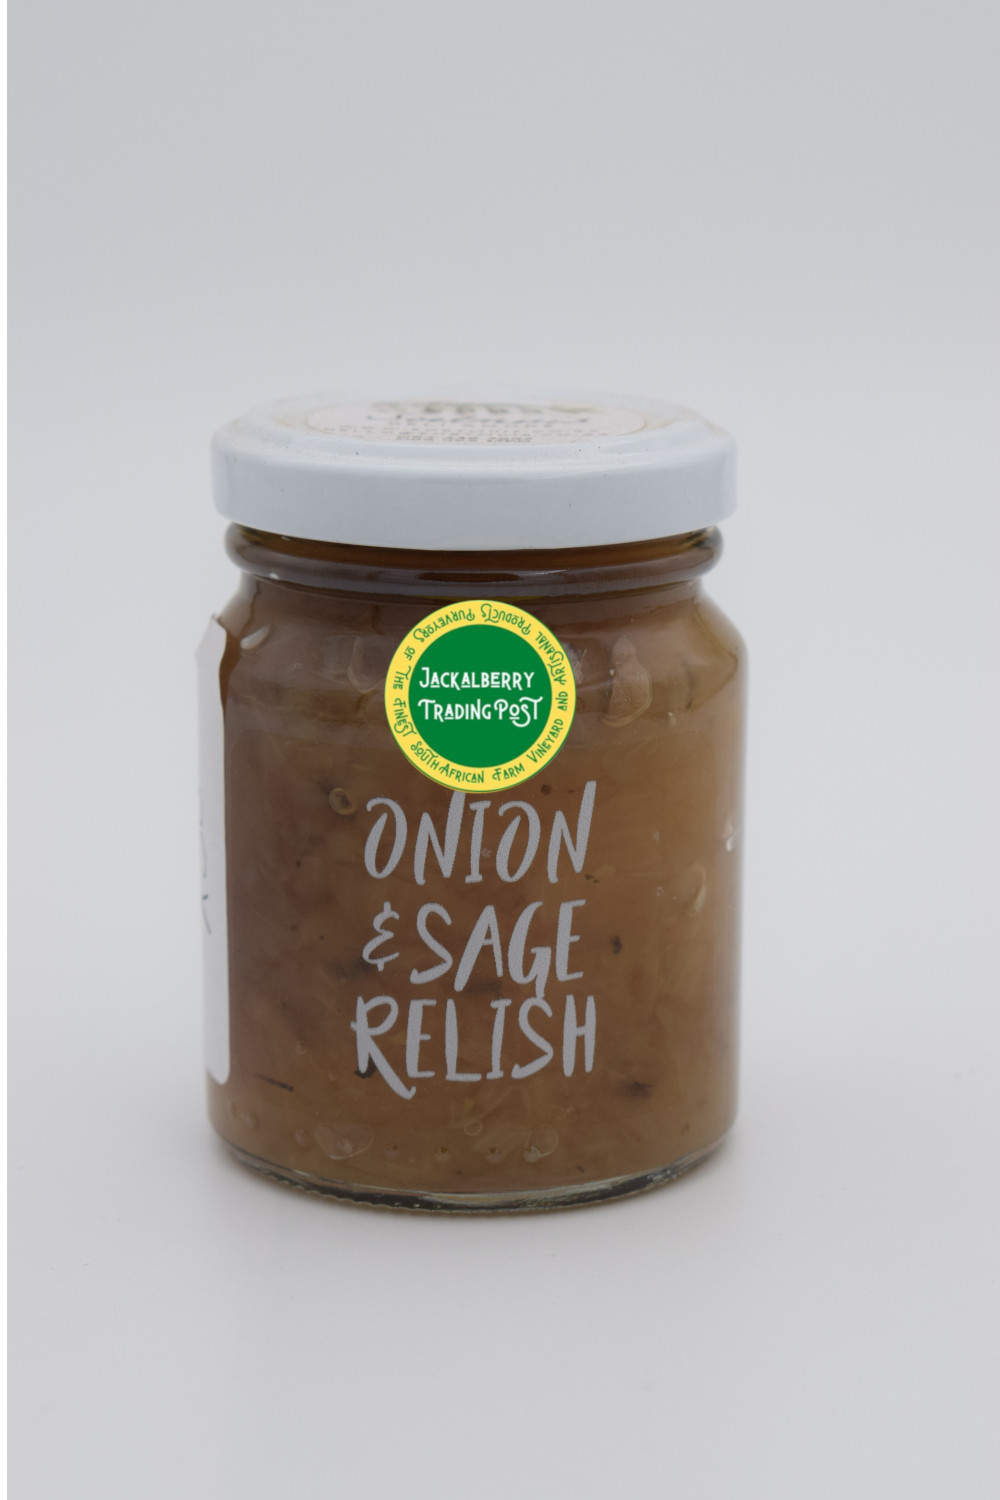 Soetmuis Deli Goods Onion And Sage Relish